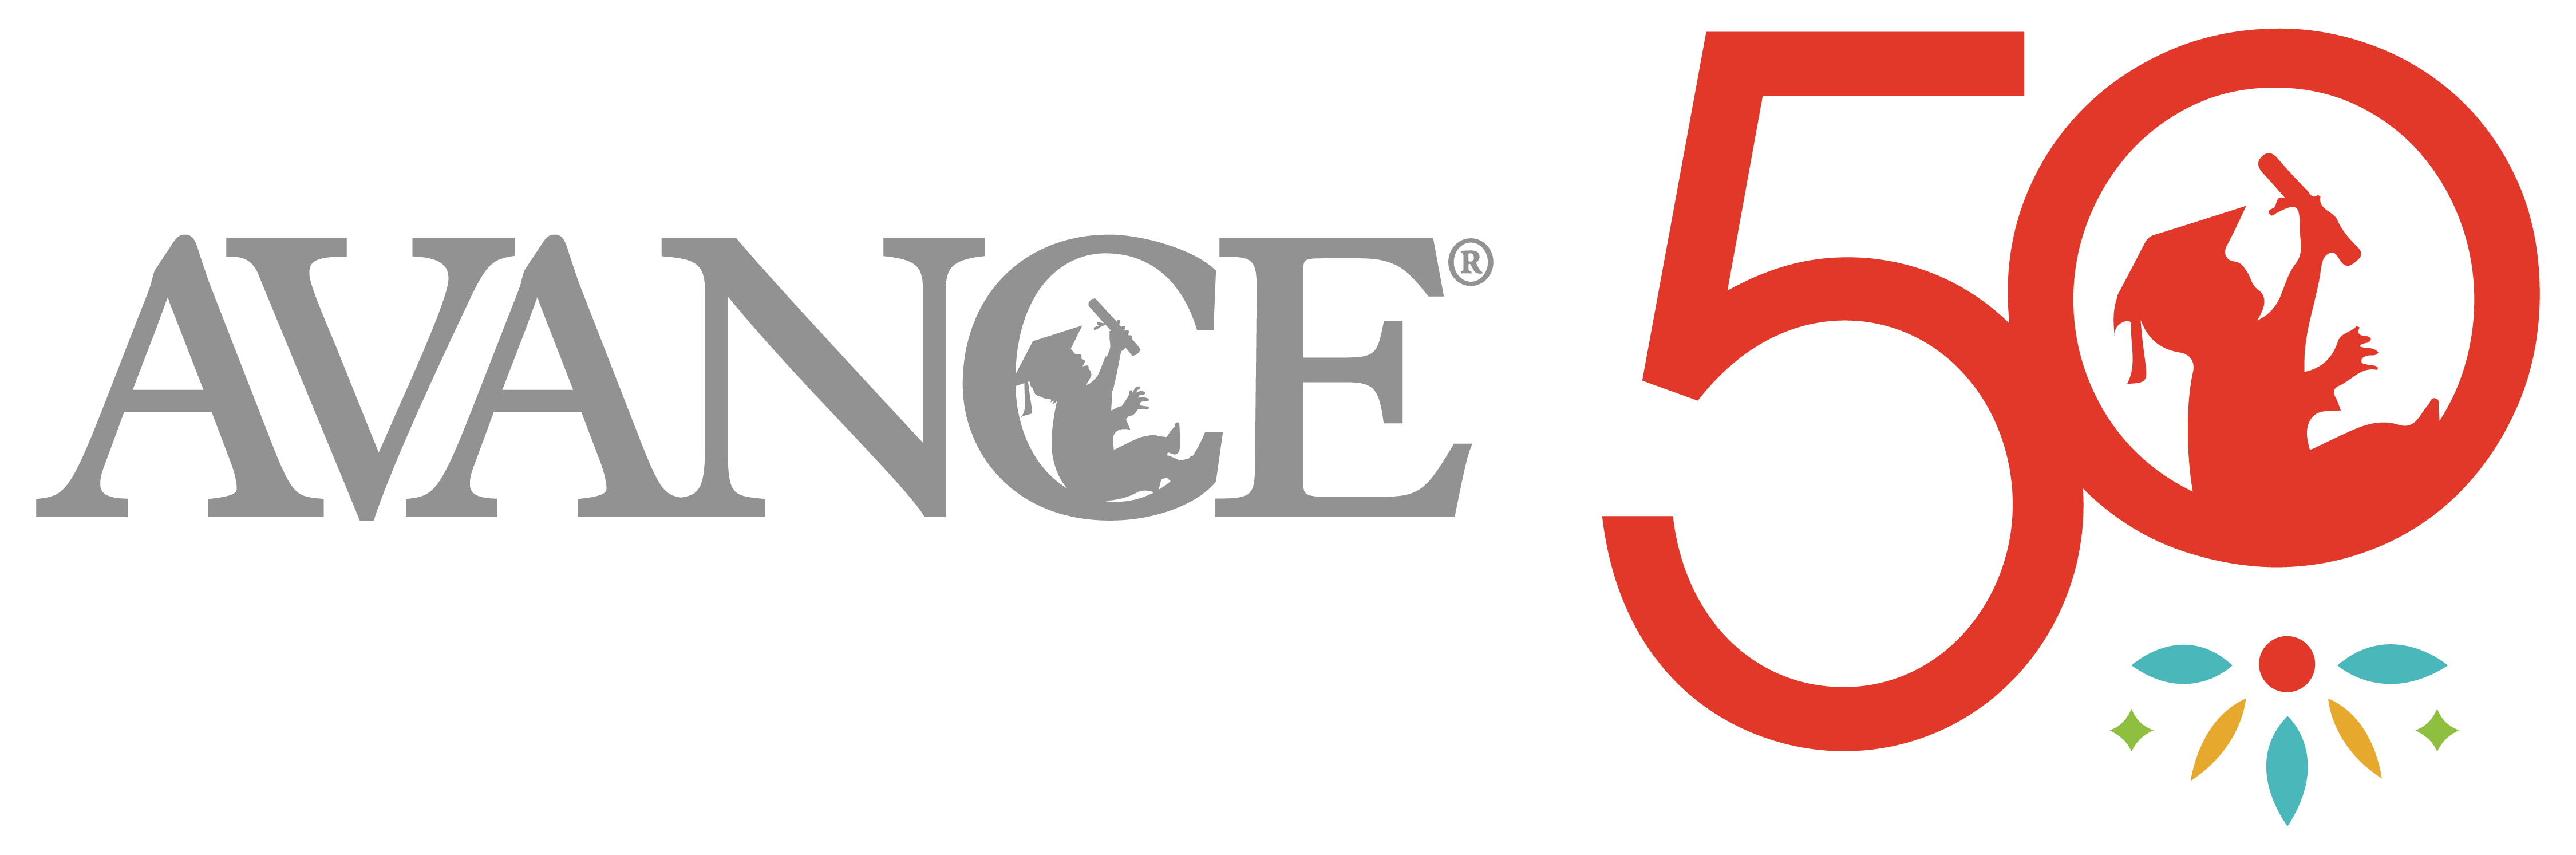 AVANCE-50th-Logo-Horizontal